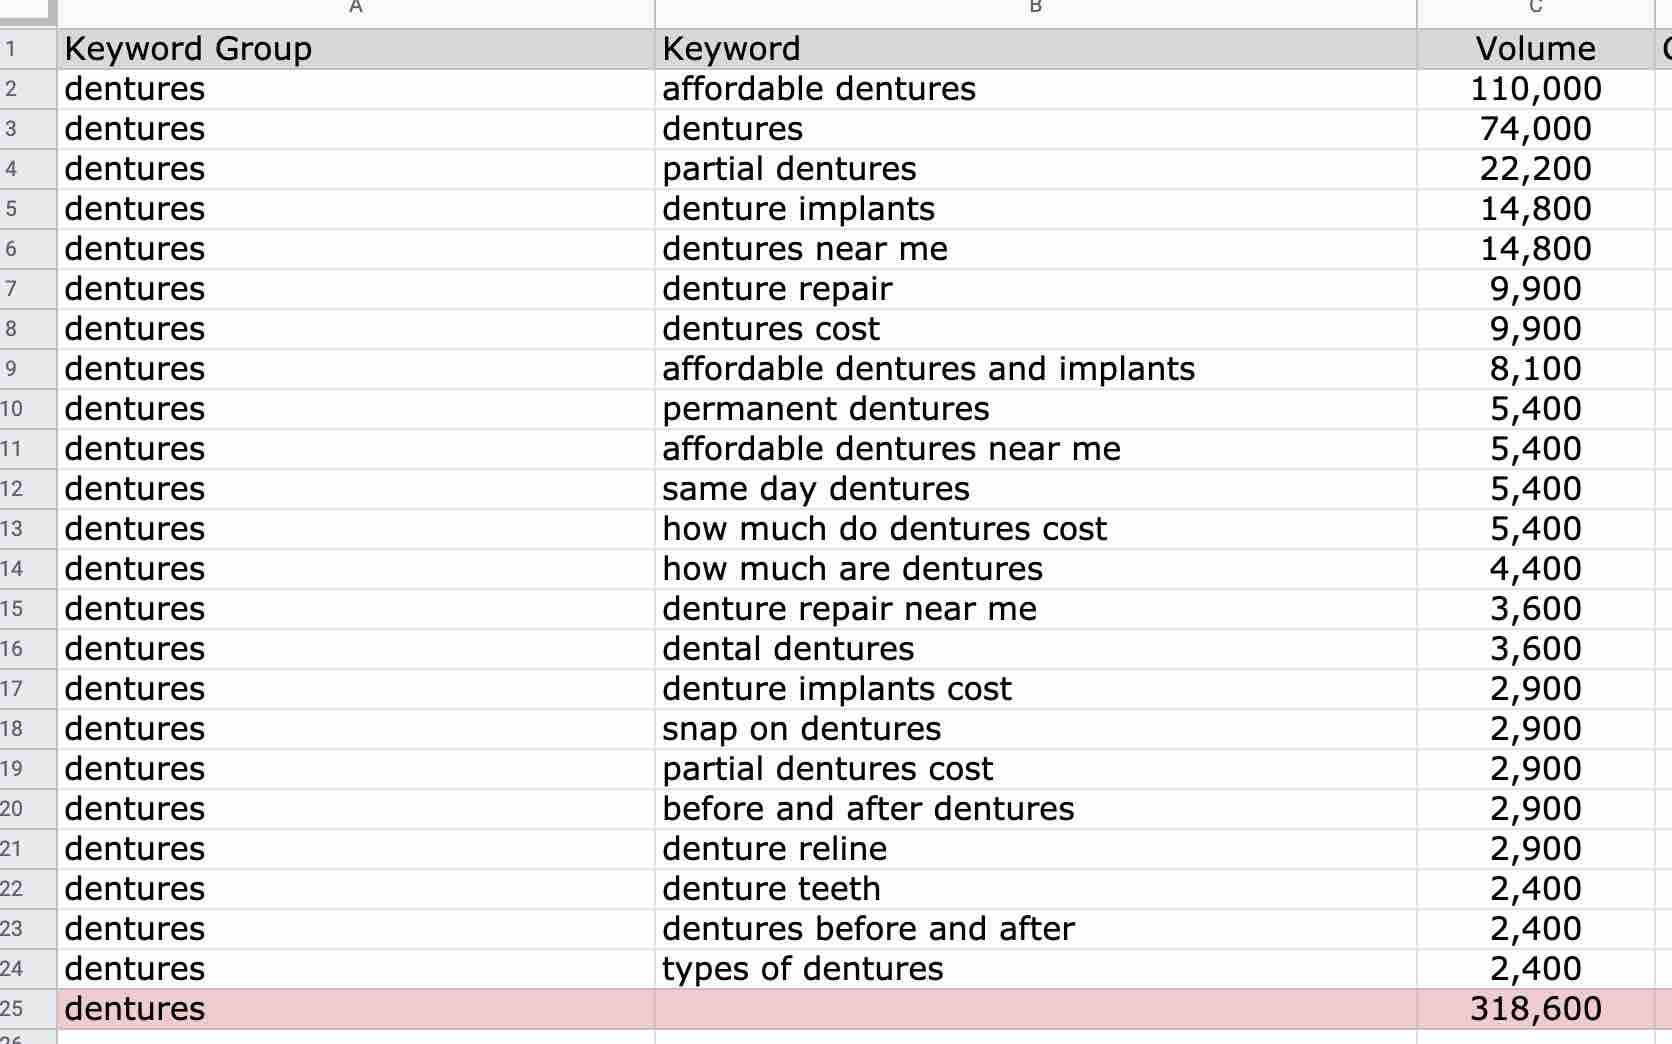 denture keywords